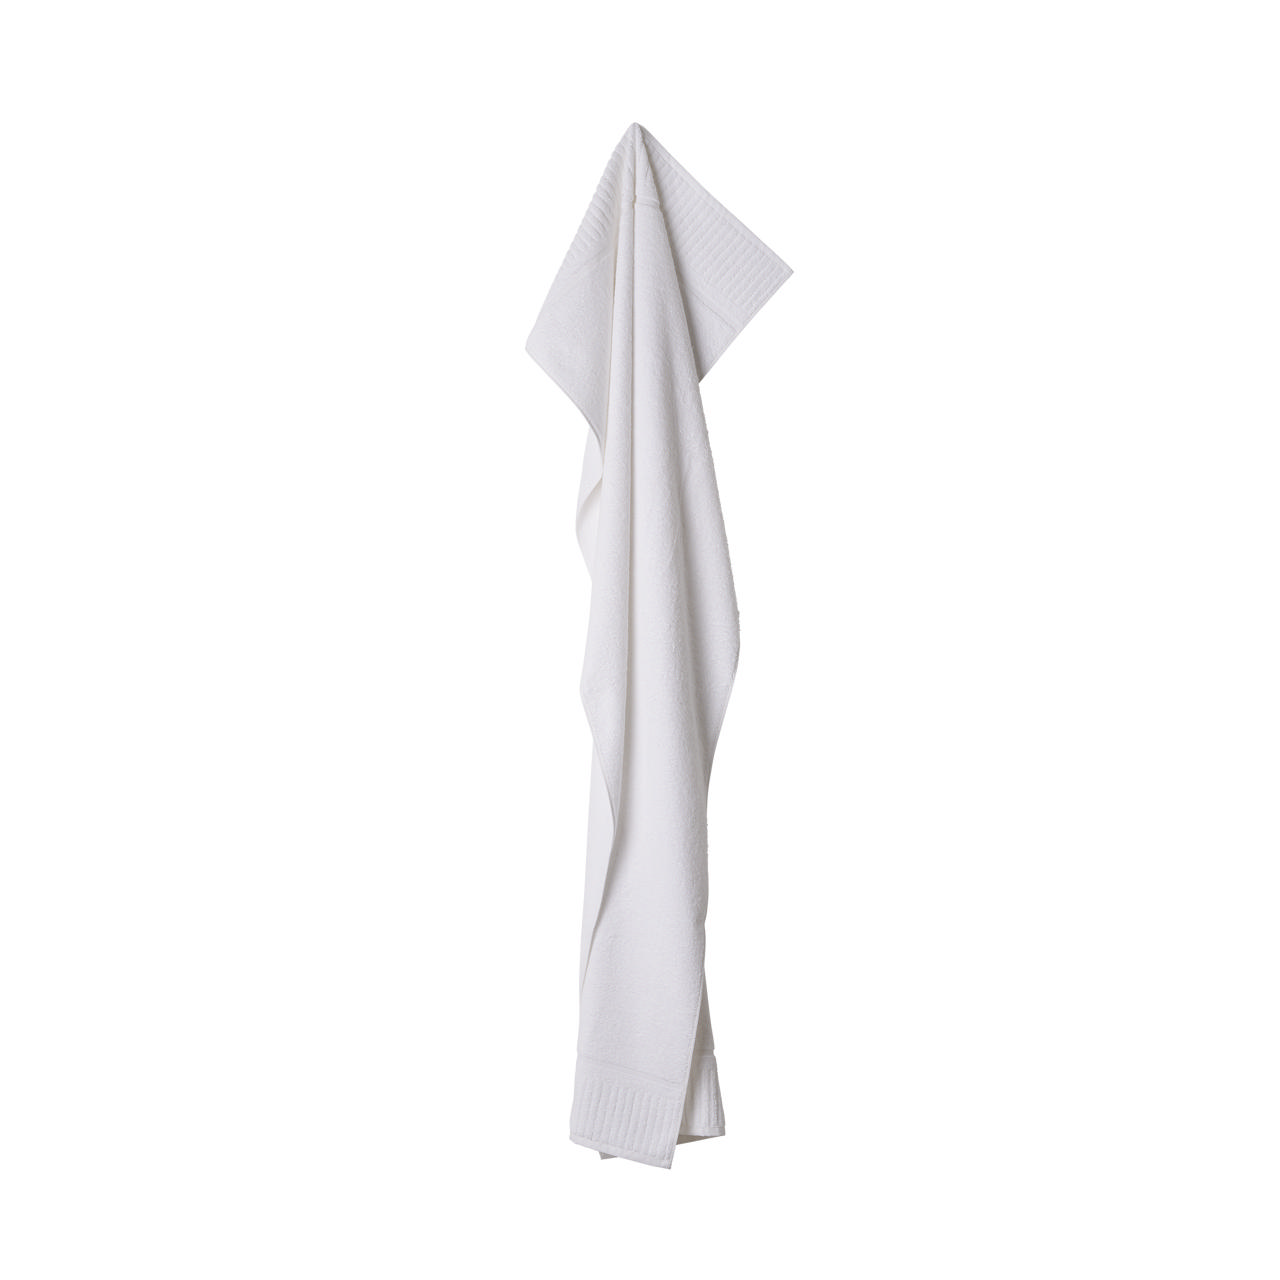 Frederik badehåndklæde 70x157 cm